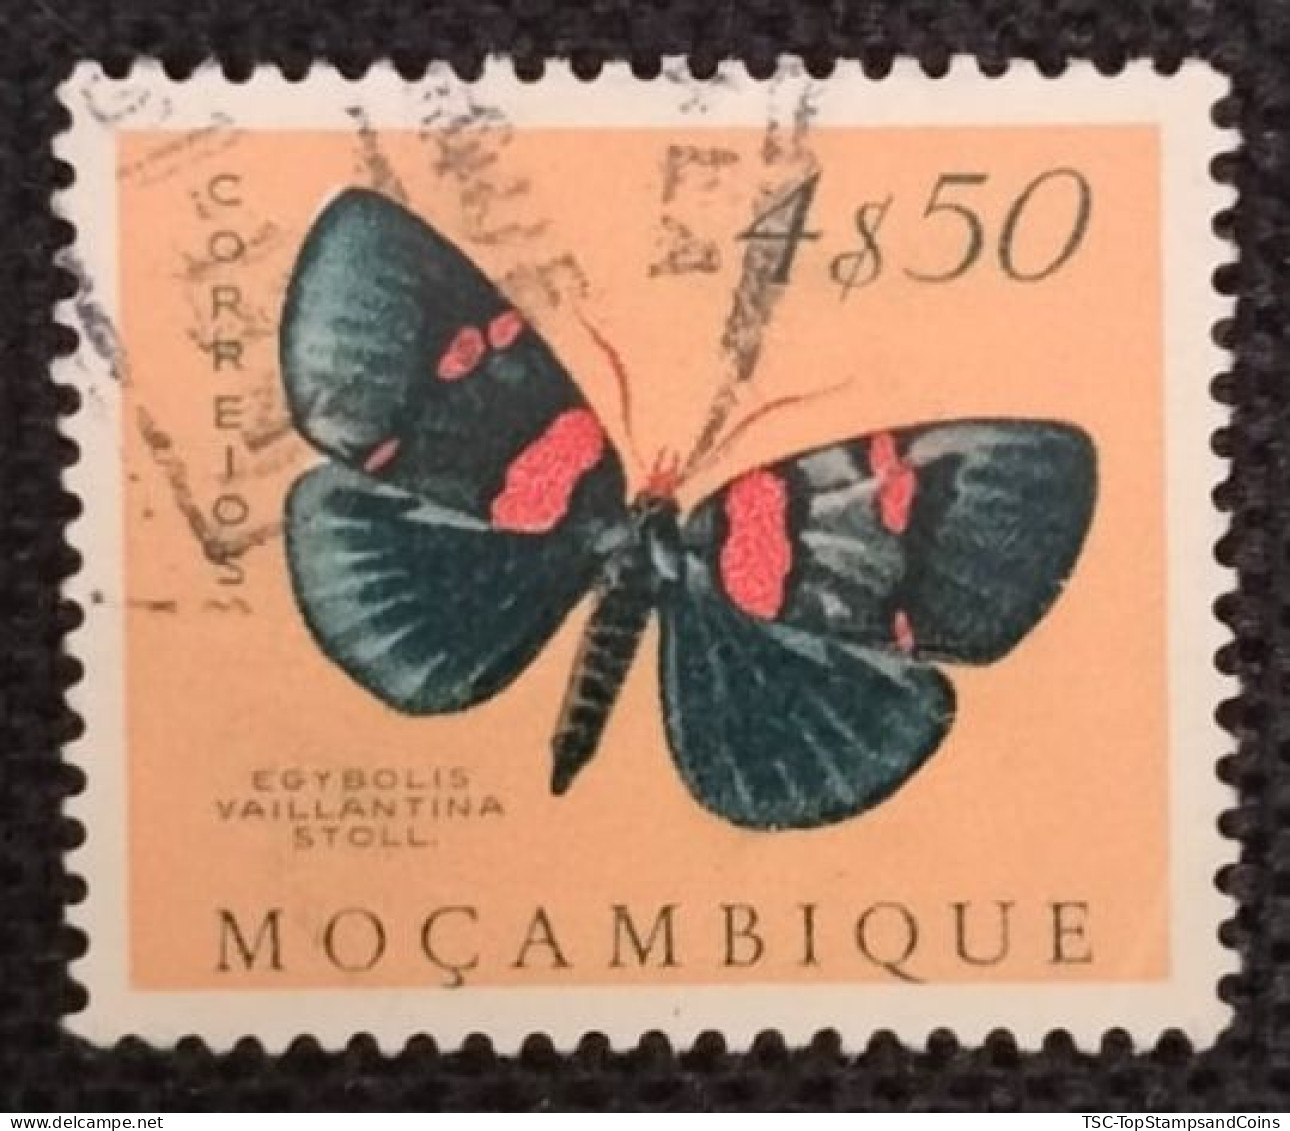 MOZPO0402UA - Mozambique Butterflies - 4$50 Used Stamp - Mozambique - 1953 - Mozambique